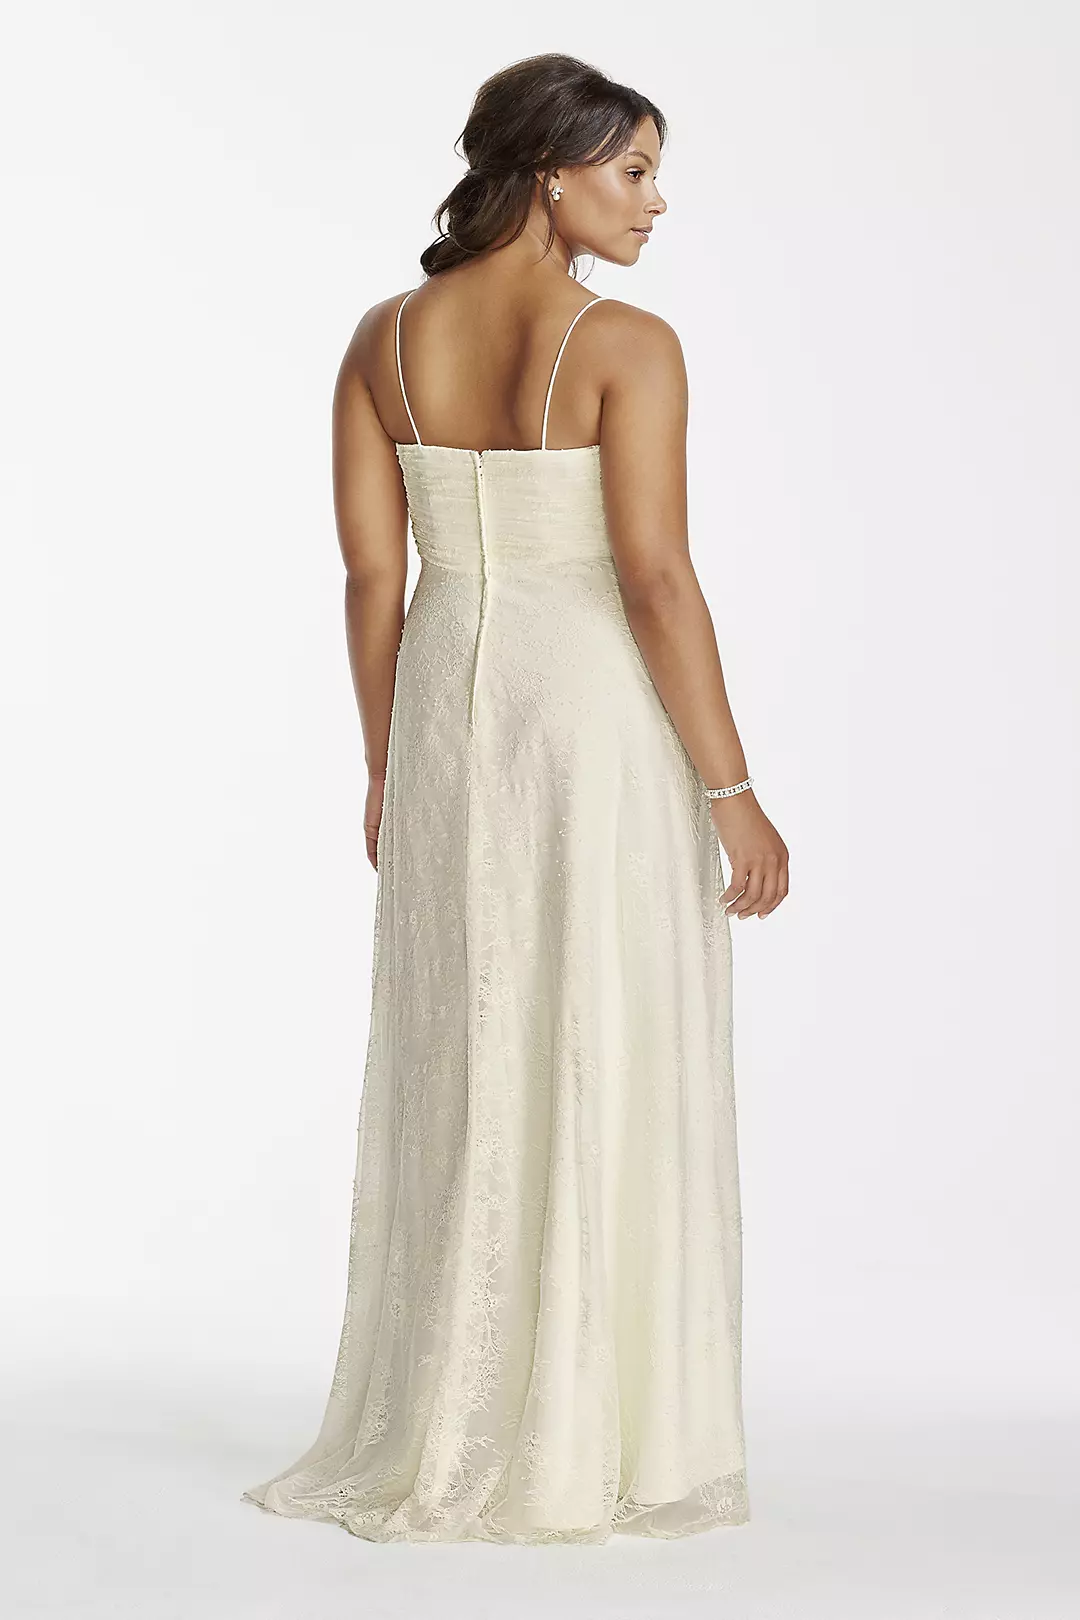 As-Is Spaghetti Strap Lace Plus Size Wedding Dress Image 2